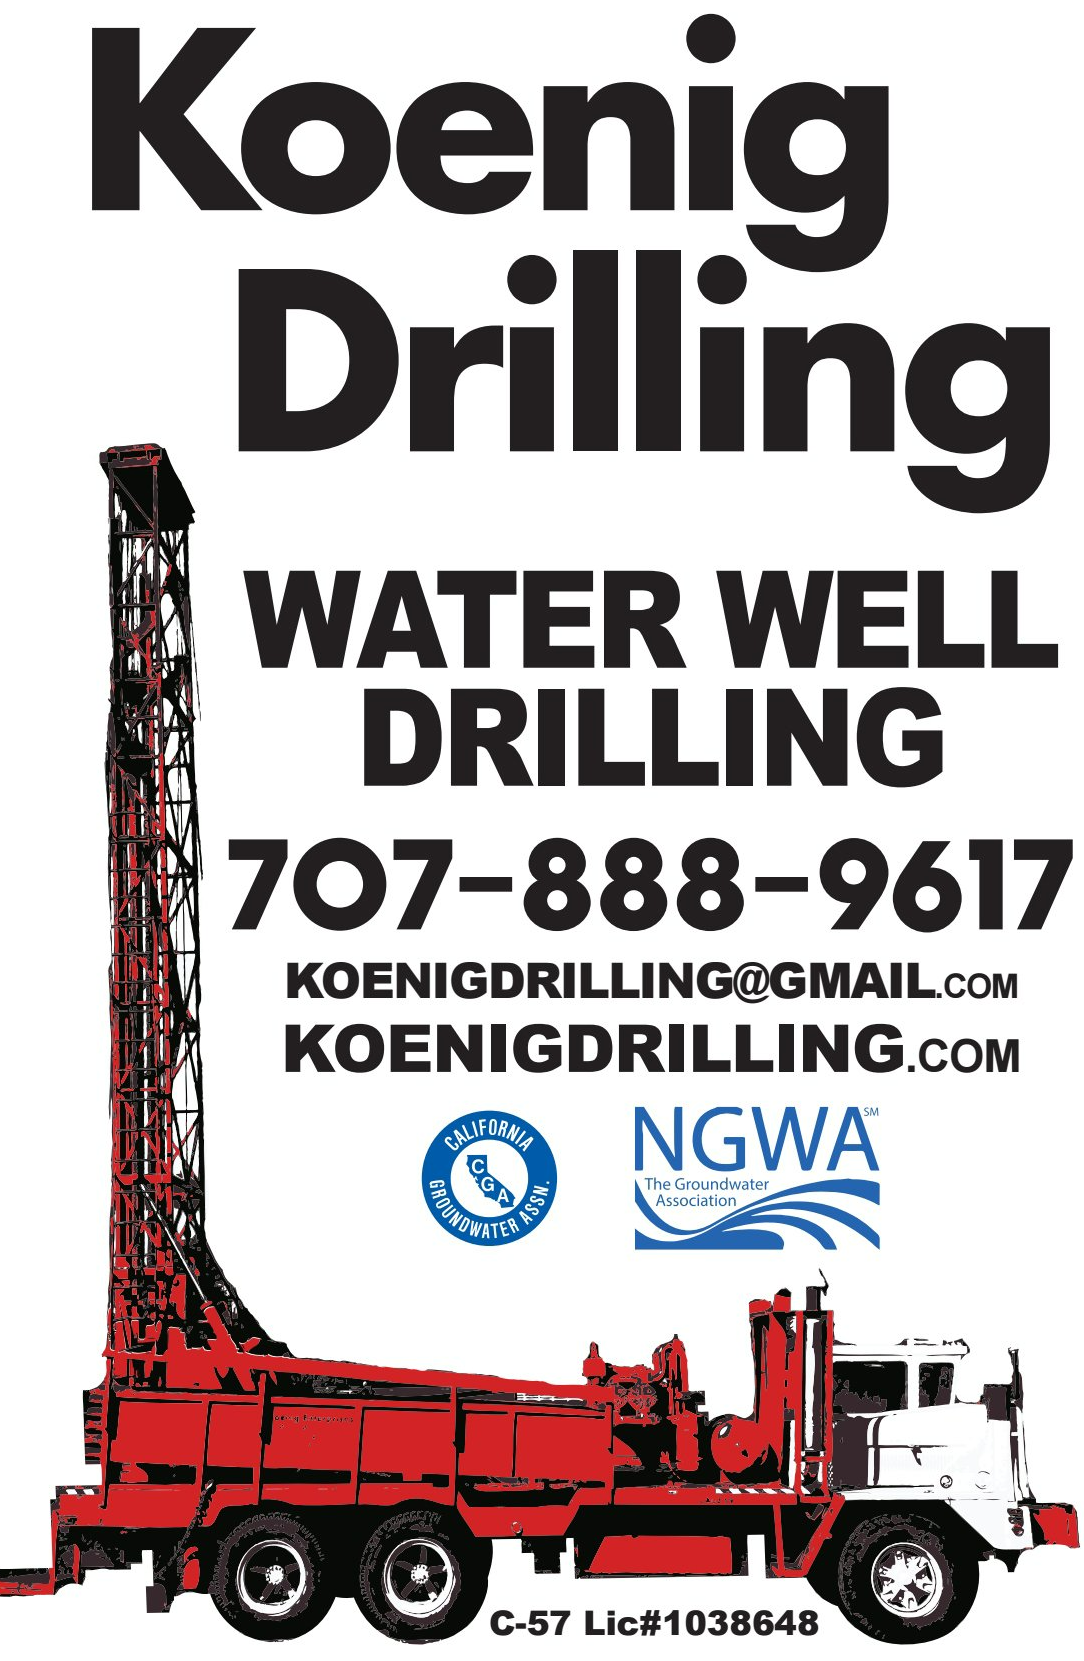 Koenig Drilling